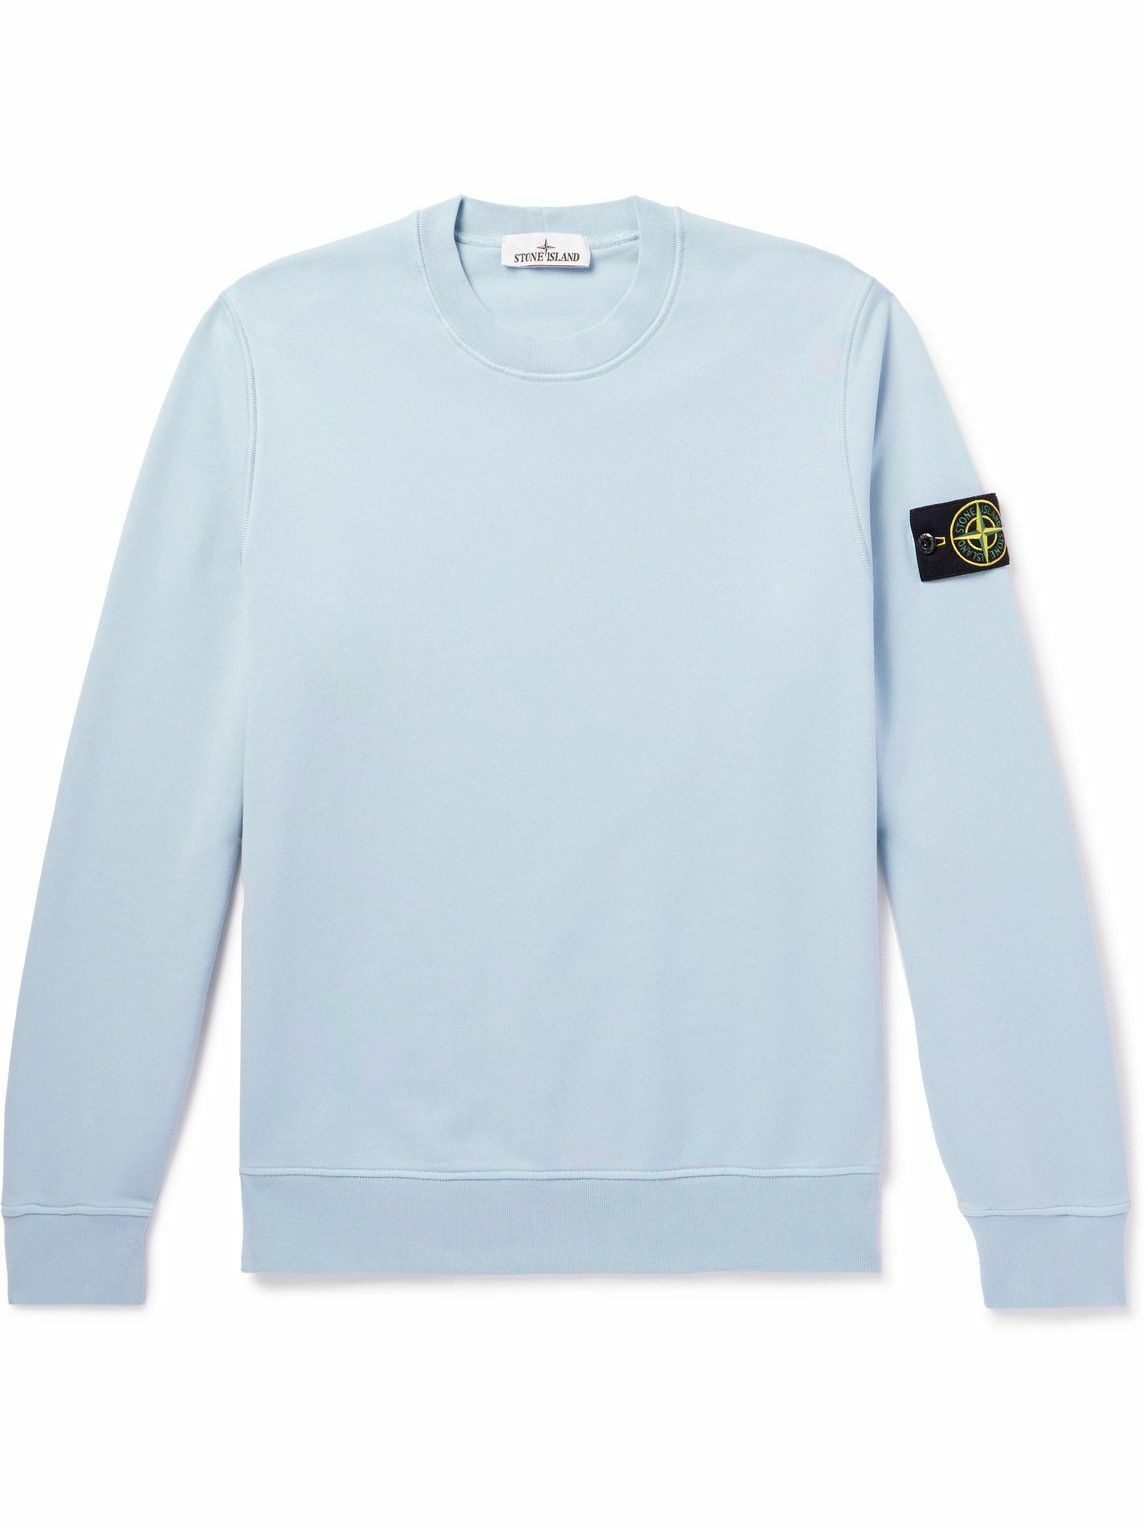 Stone Island - Logo-Appliquéd Cotton-Jersey Sweatshirt - Blue Stone Island